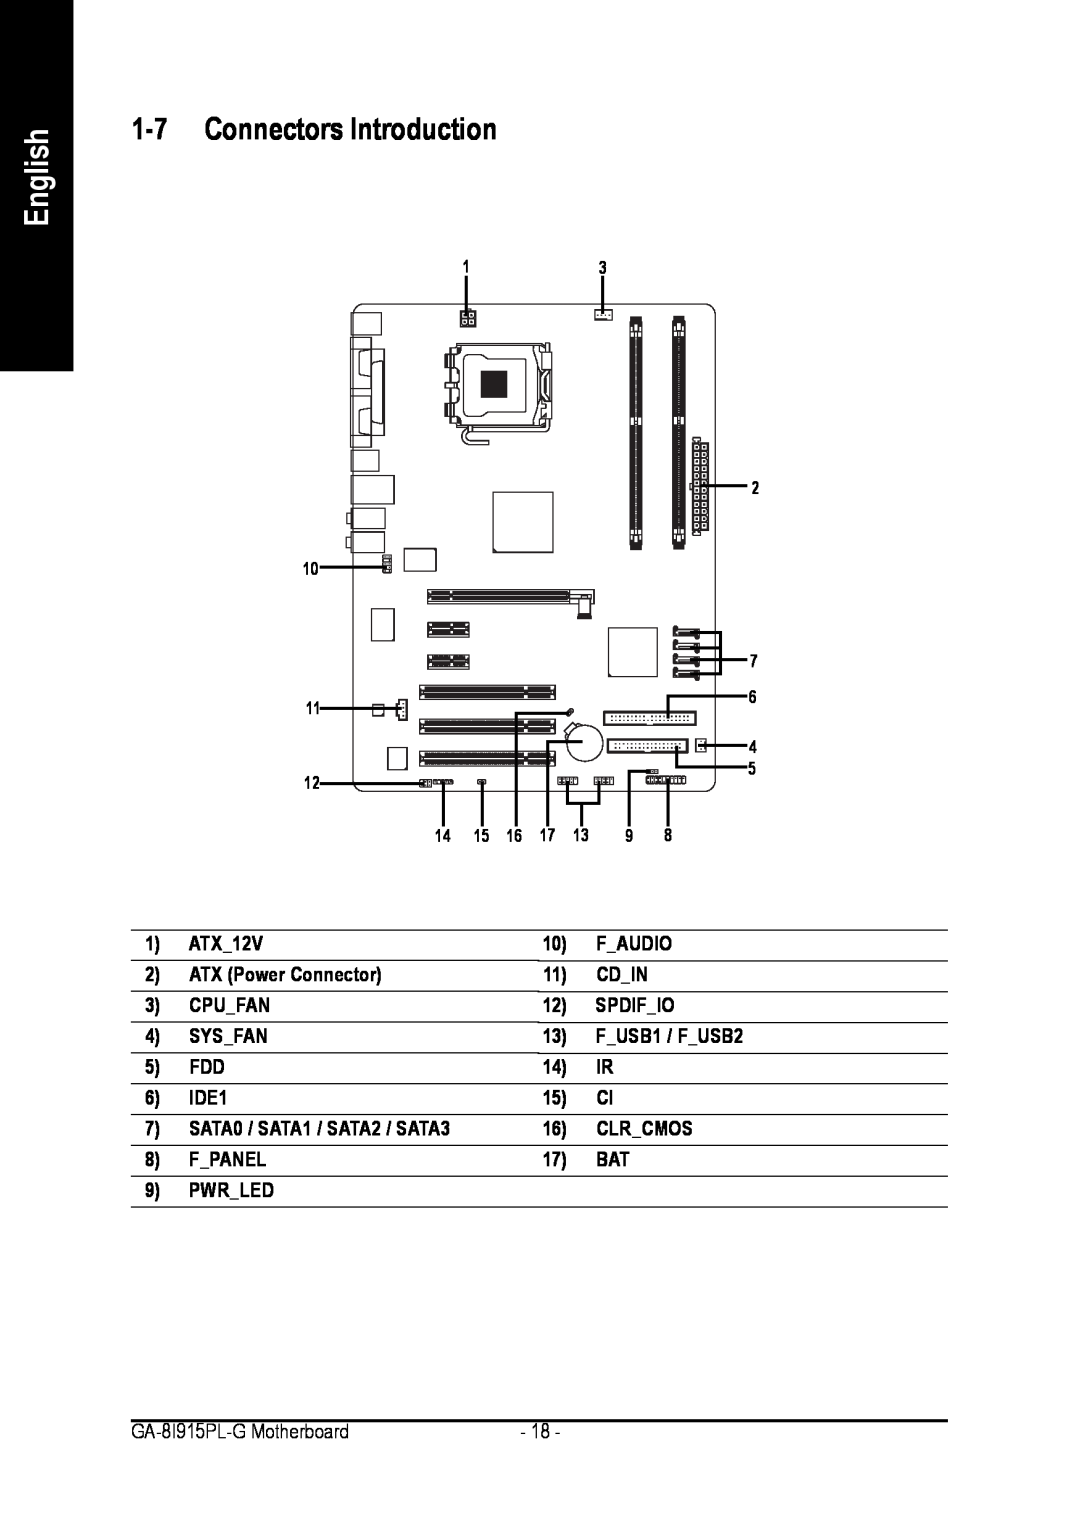 Intel GA-8I915PL-G user manual Connectors Introduction, English 